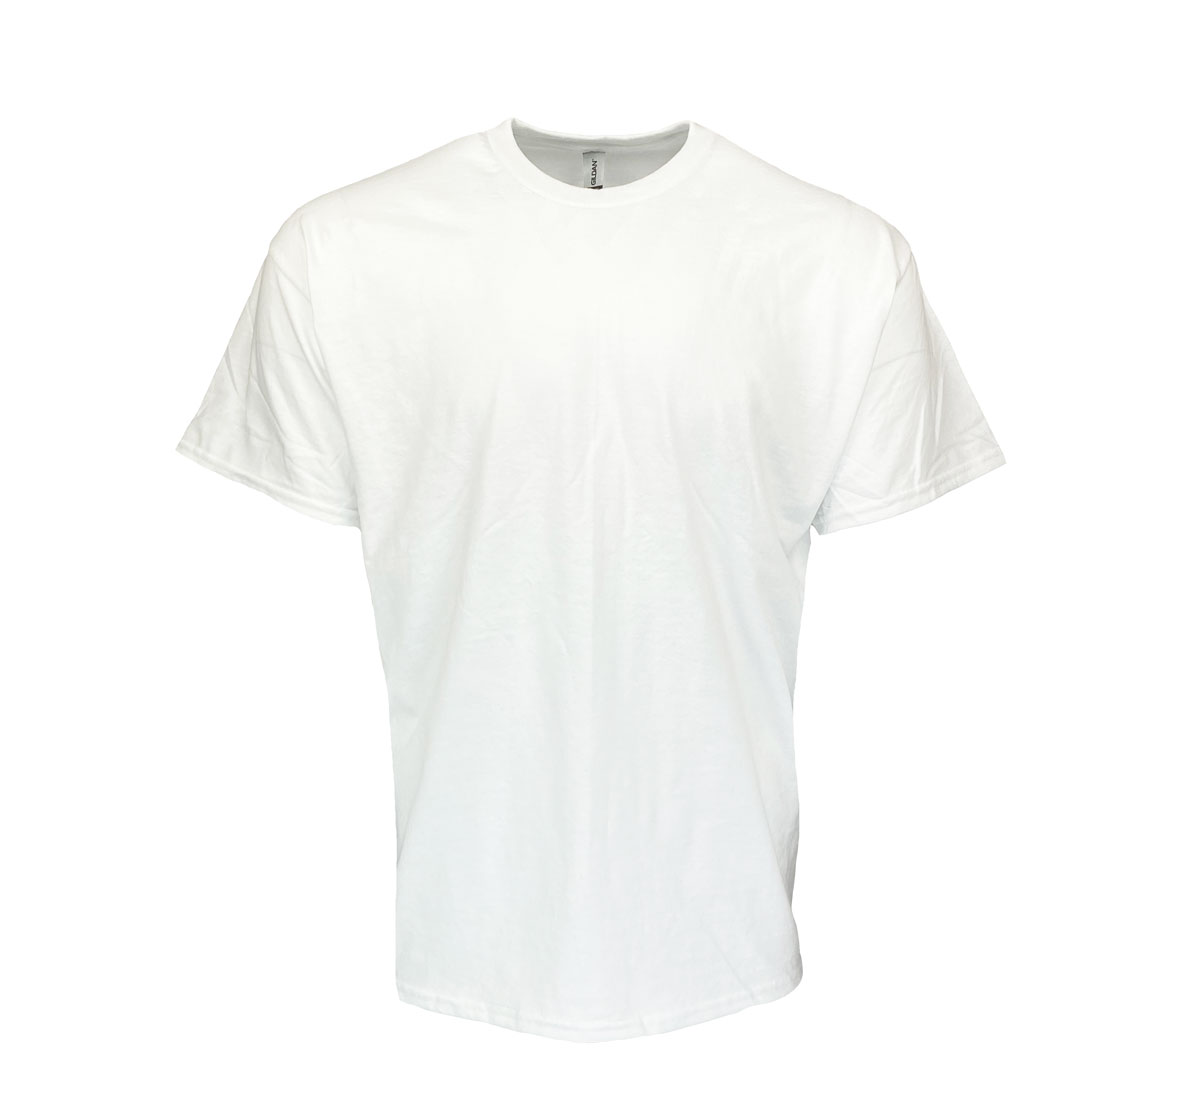 Style 800WT | Wholesale Gildan White Crew Neck T-Shirts - Mill Graded